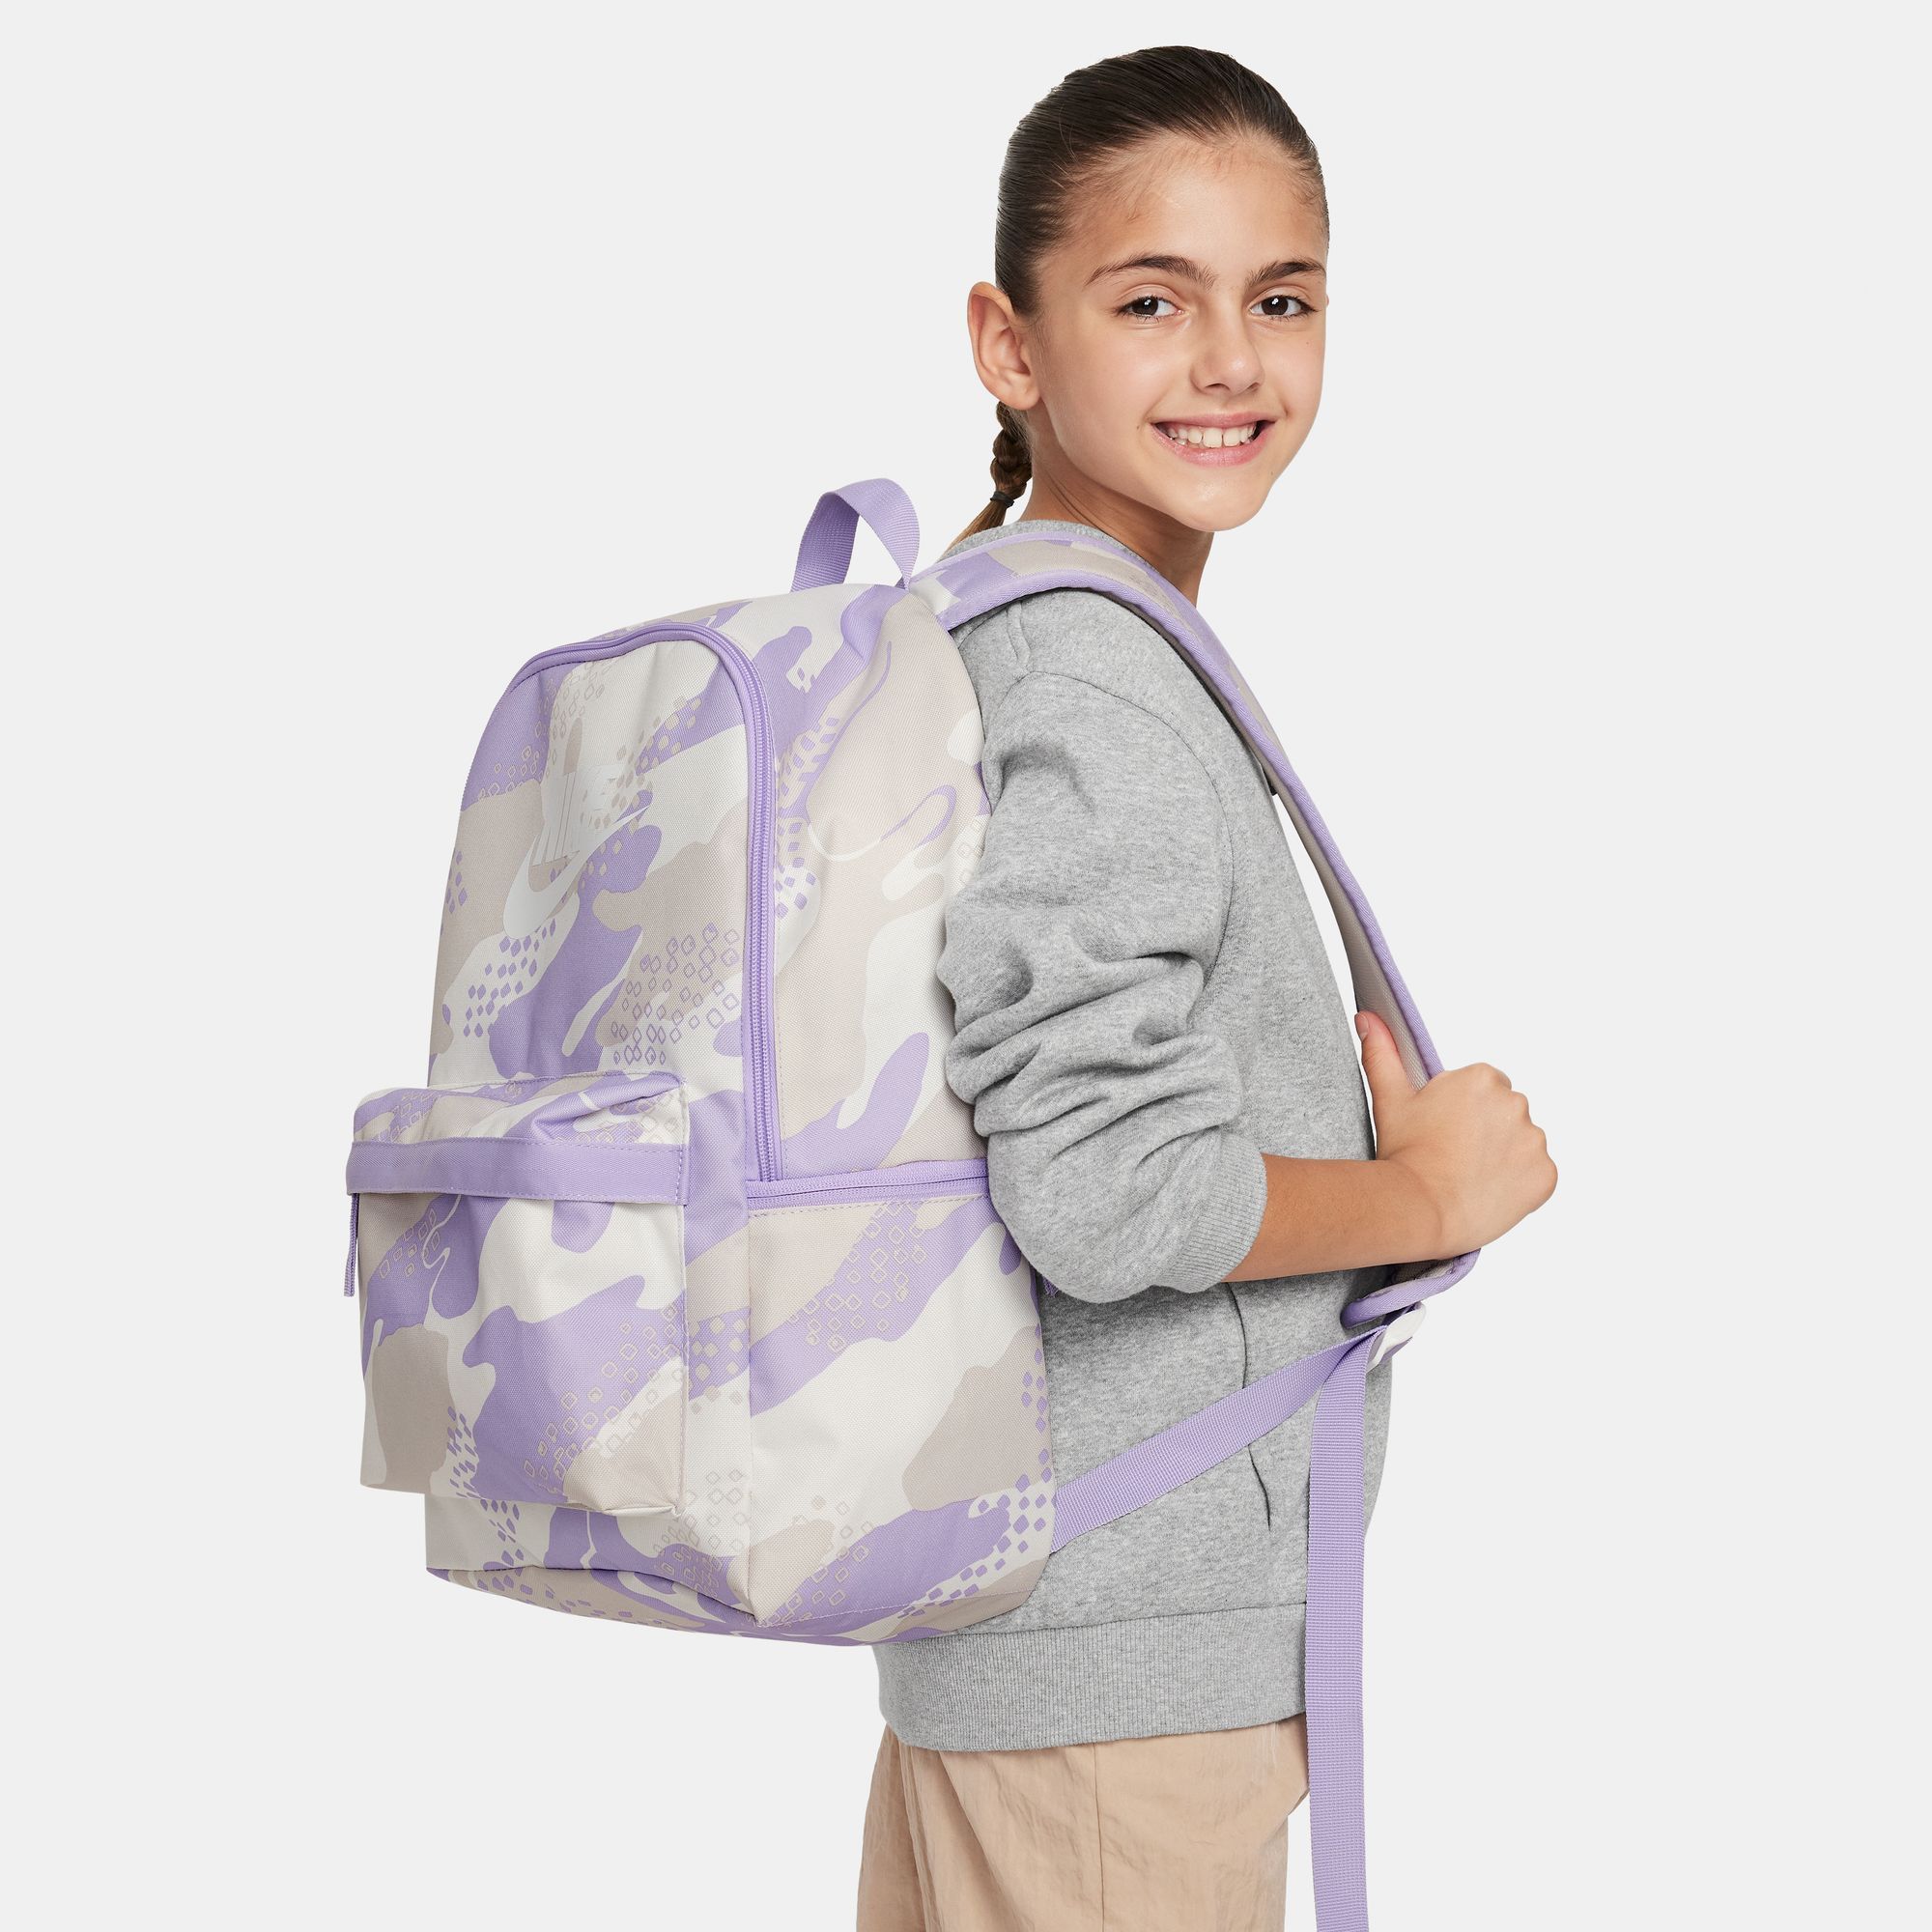 Nike Heritage Kids' Backpack (25L)